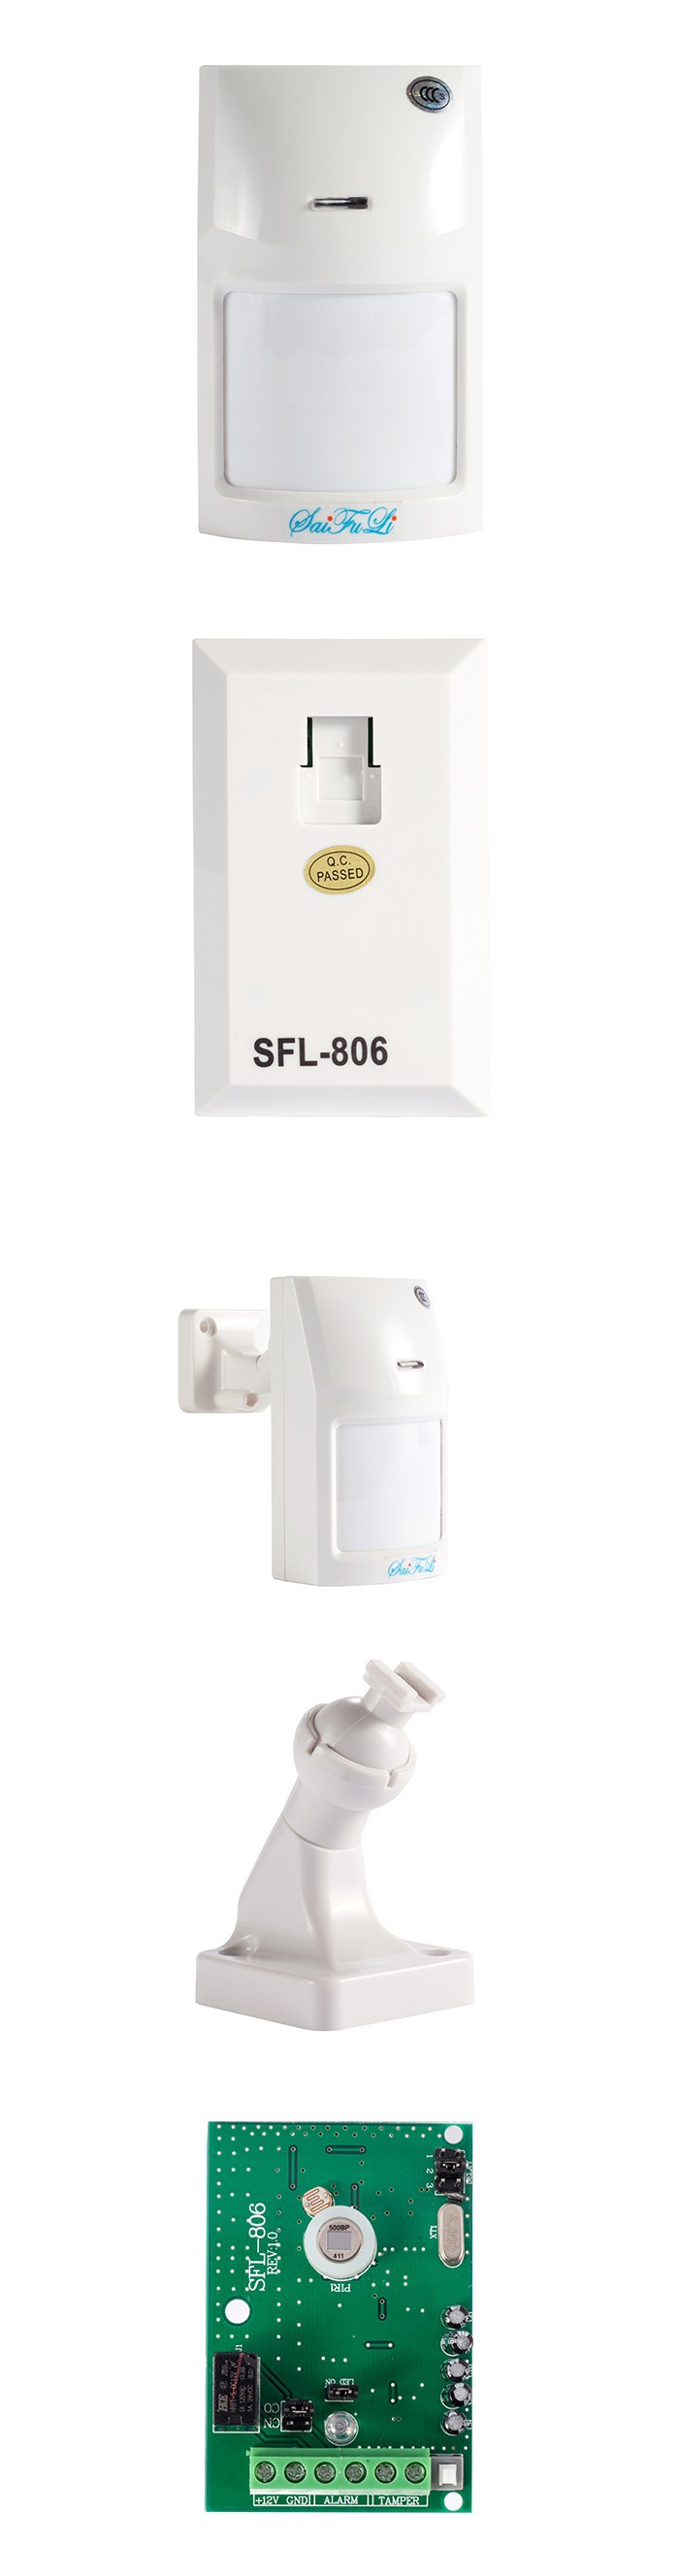 SFL-806-1